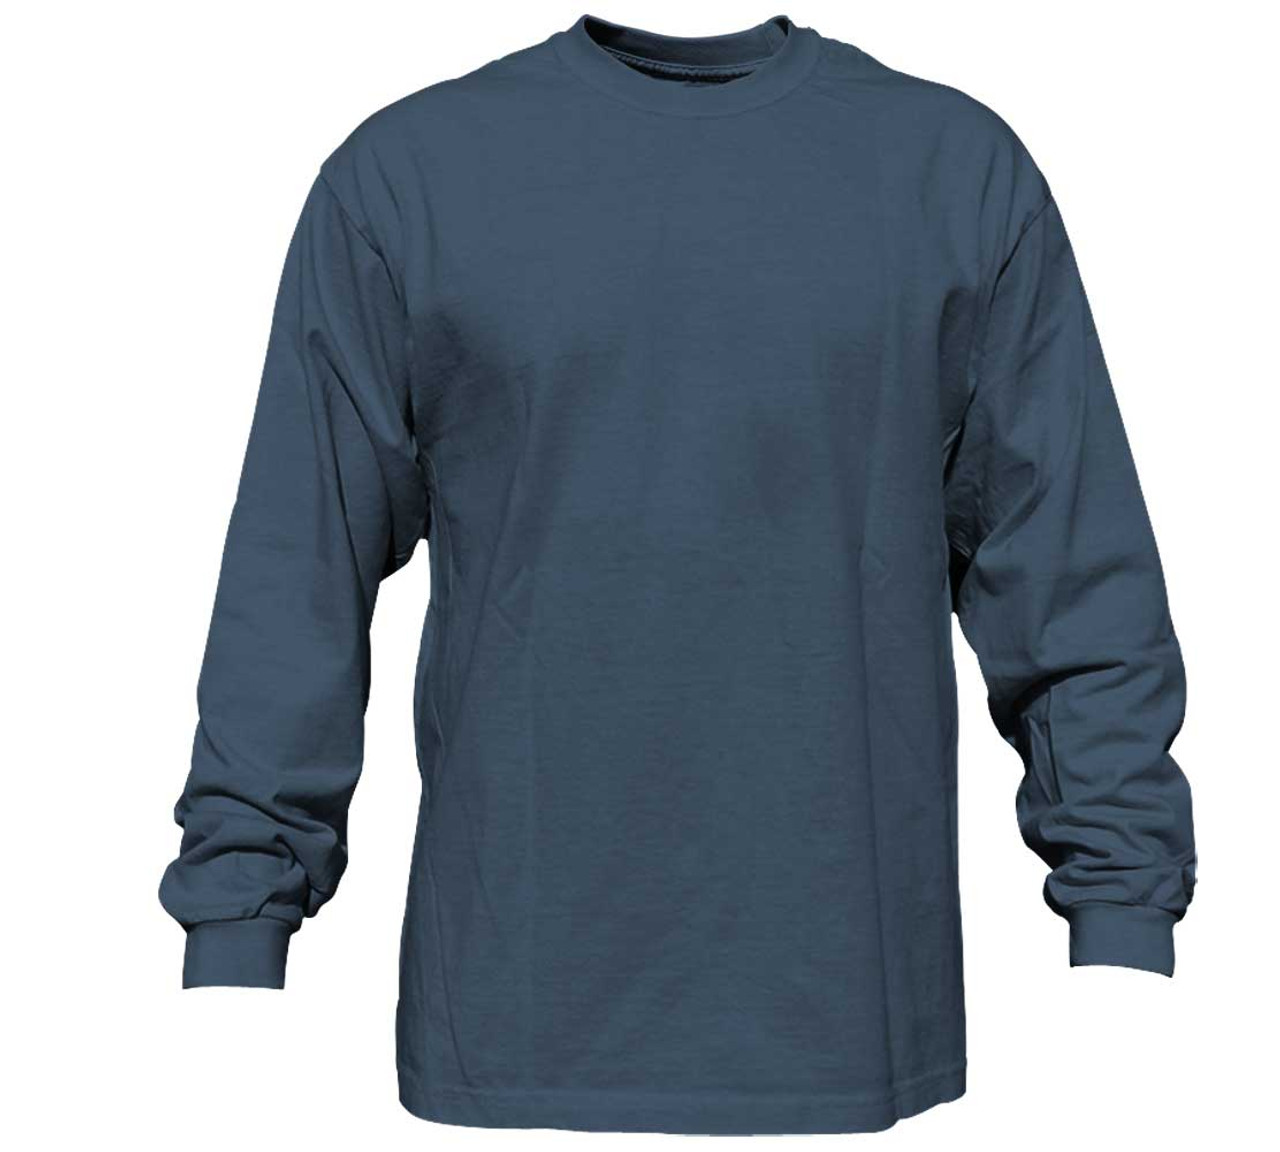 Thick cotton Long sleeve shirt Made i USA | Premium Cotton Shirts for Men